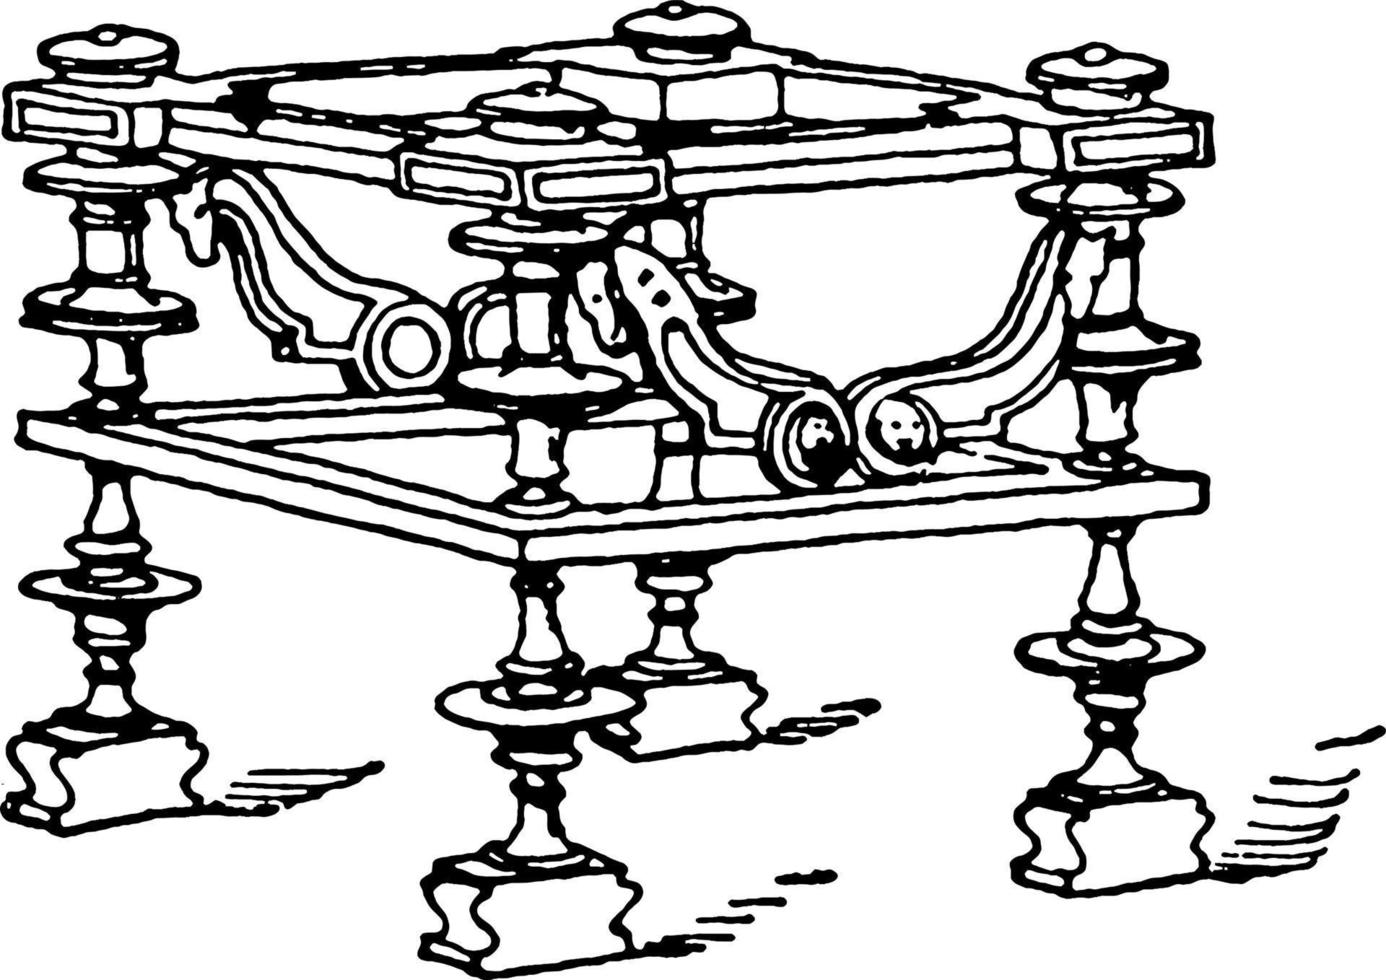 taburete bisellium romano o taburete doble romano, ilustración vintage. vector